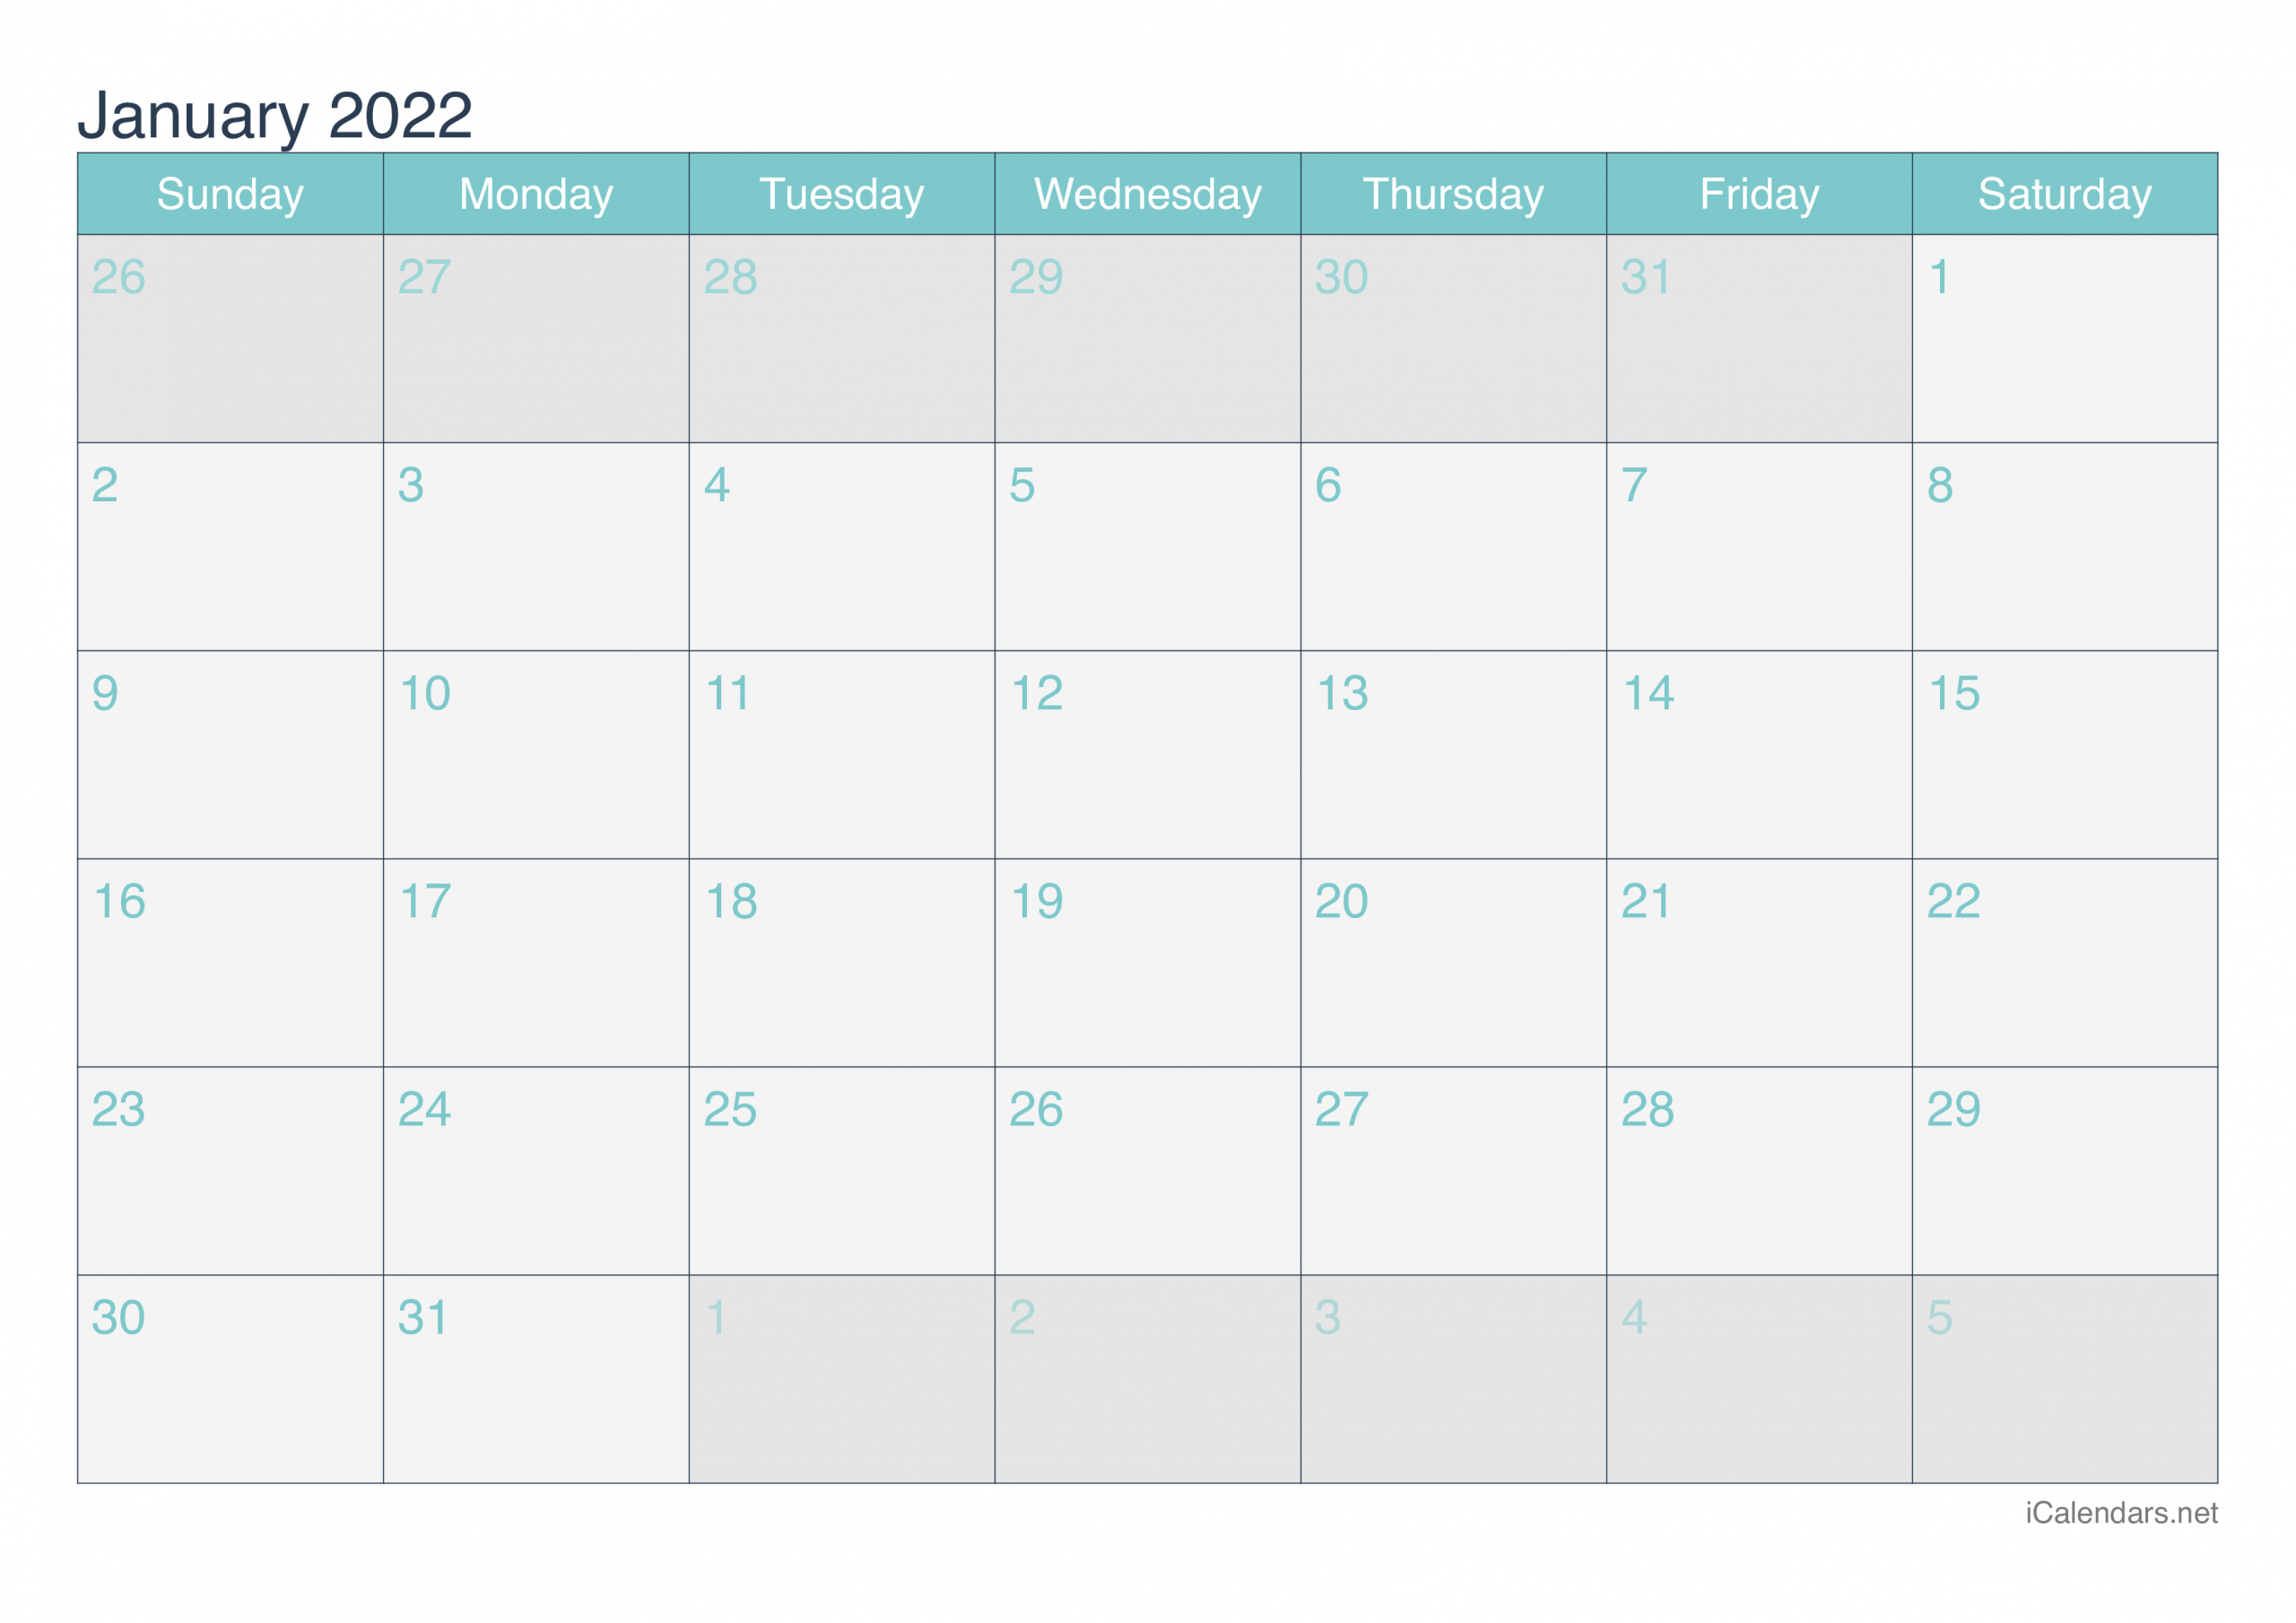 January 2022 Printable Calendar - Icalendars